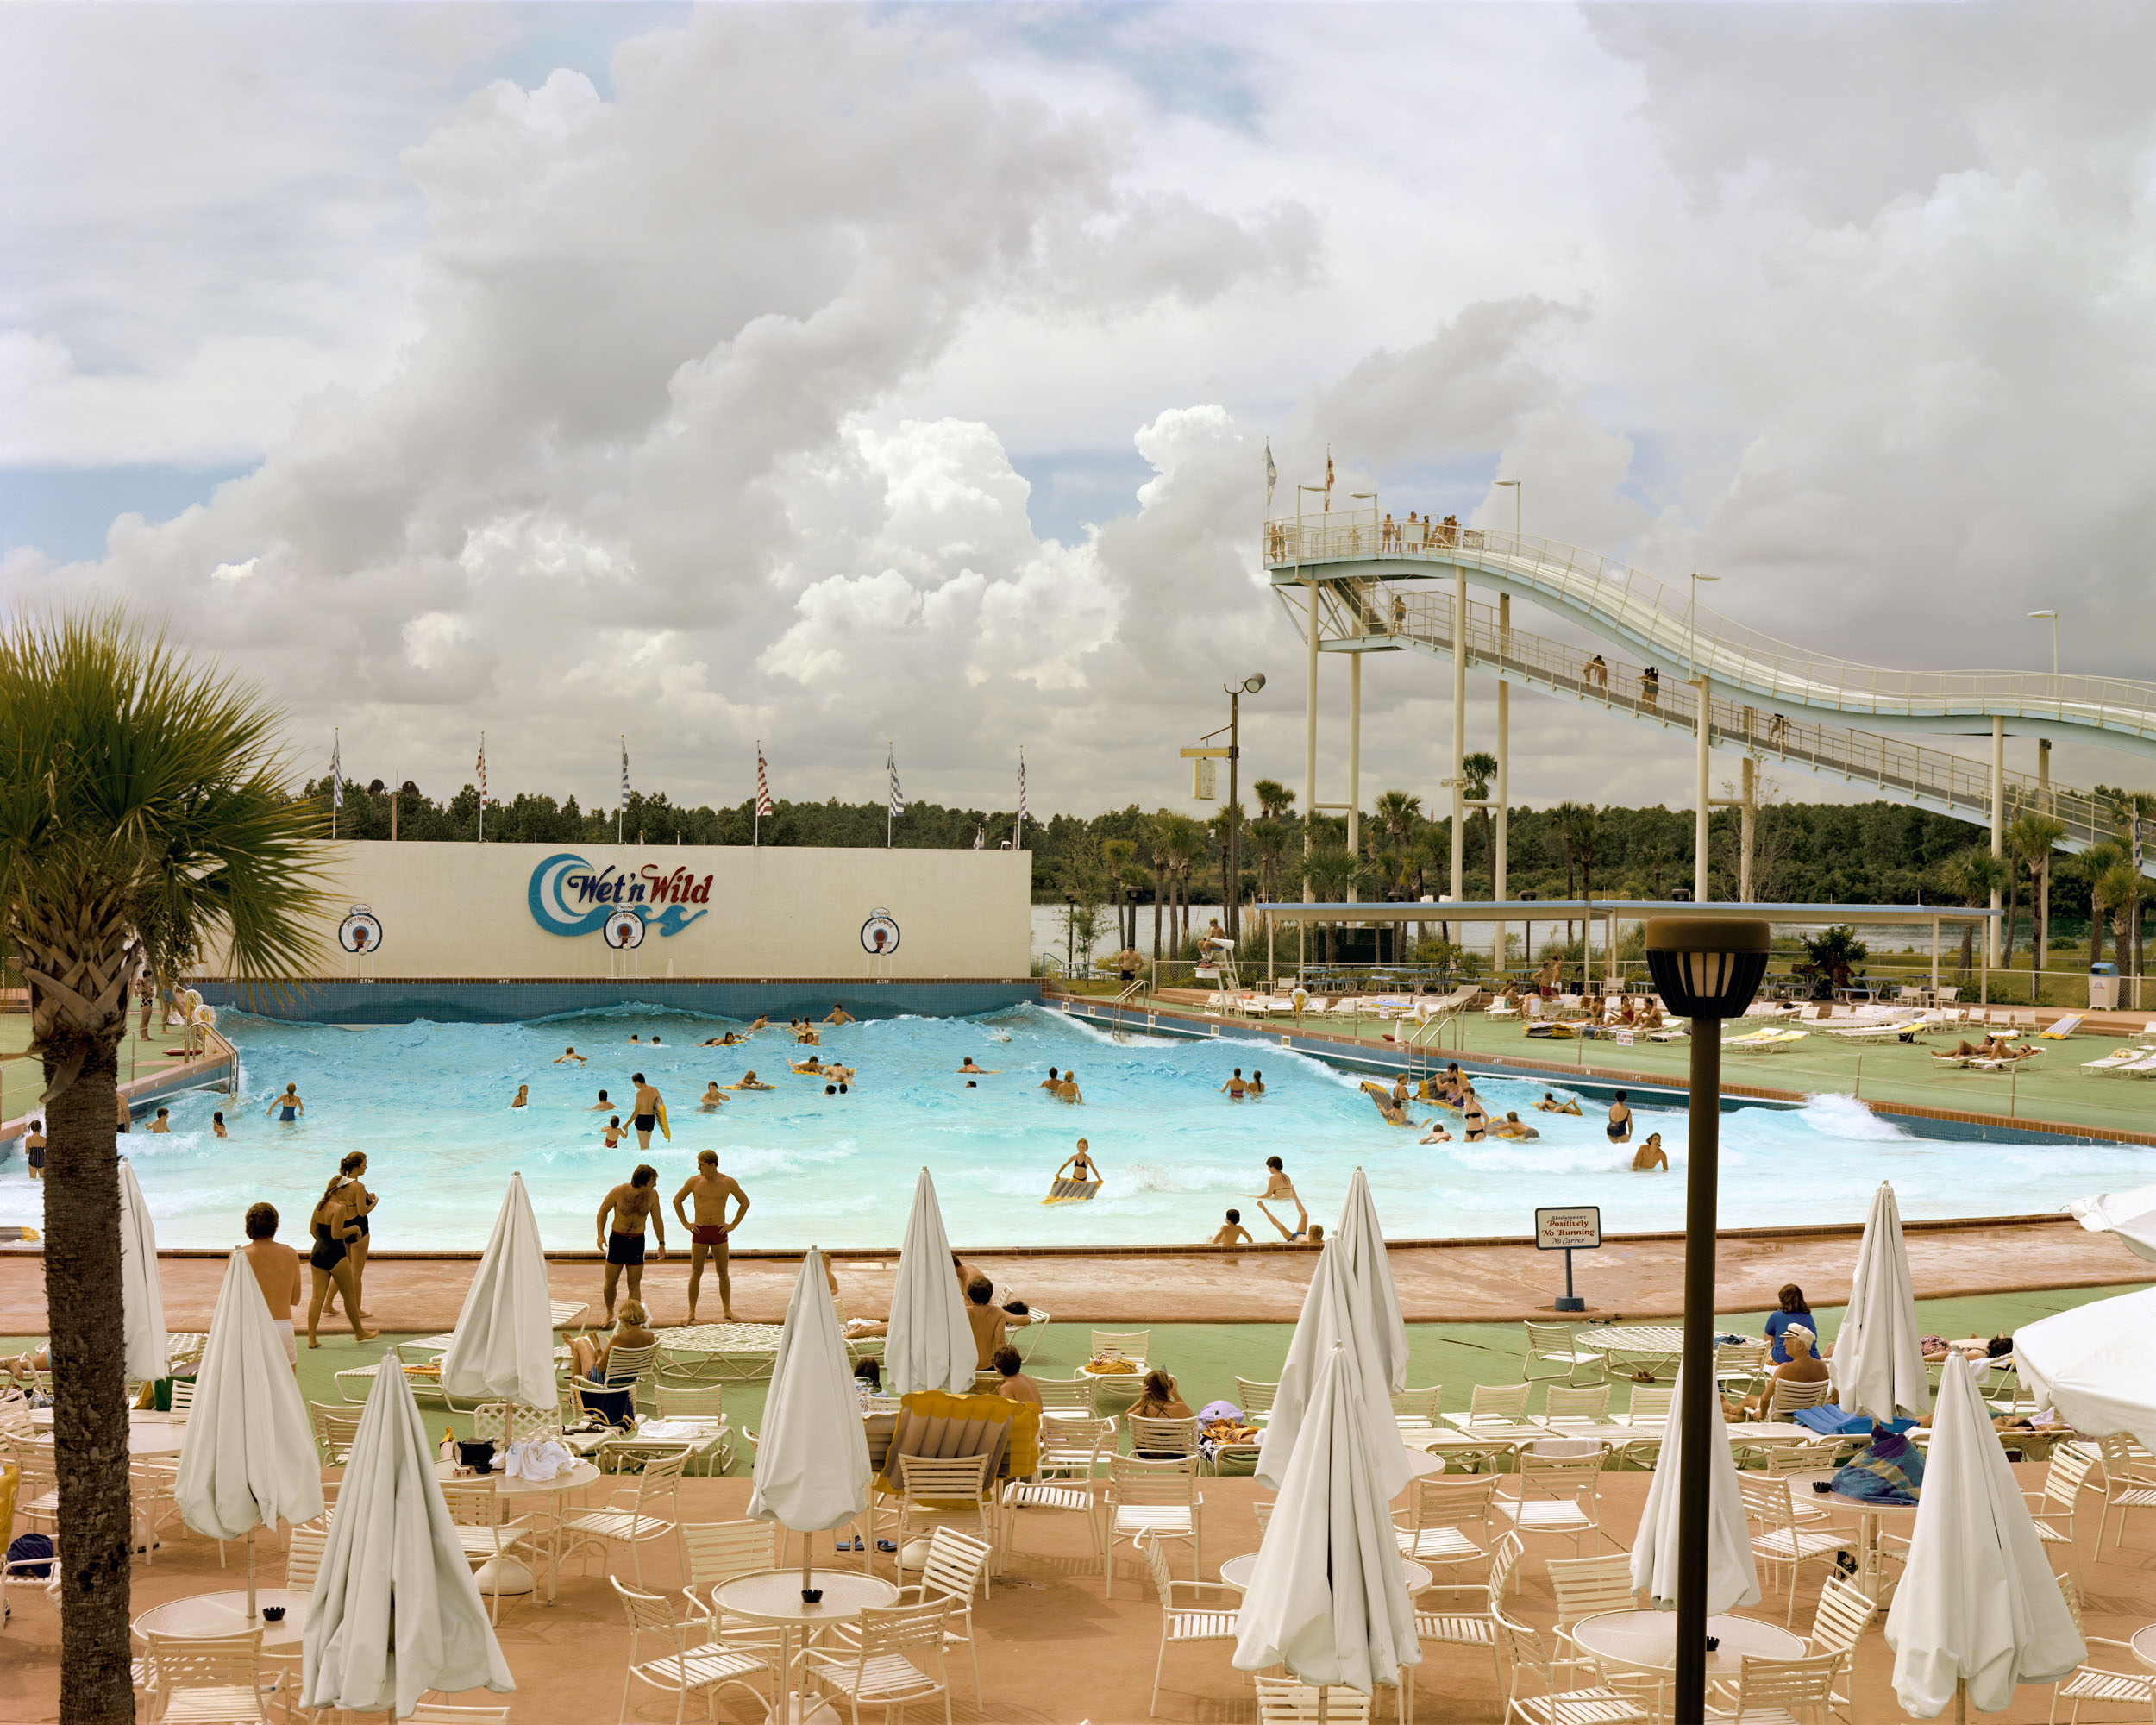 Wet n Wild Aquatic Theme Park, Orlando, Florida, September 1980